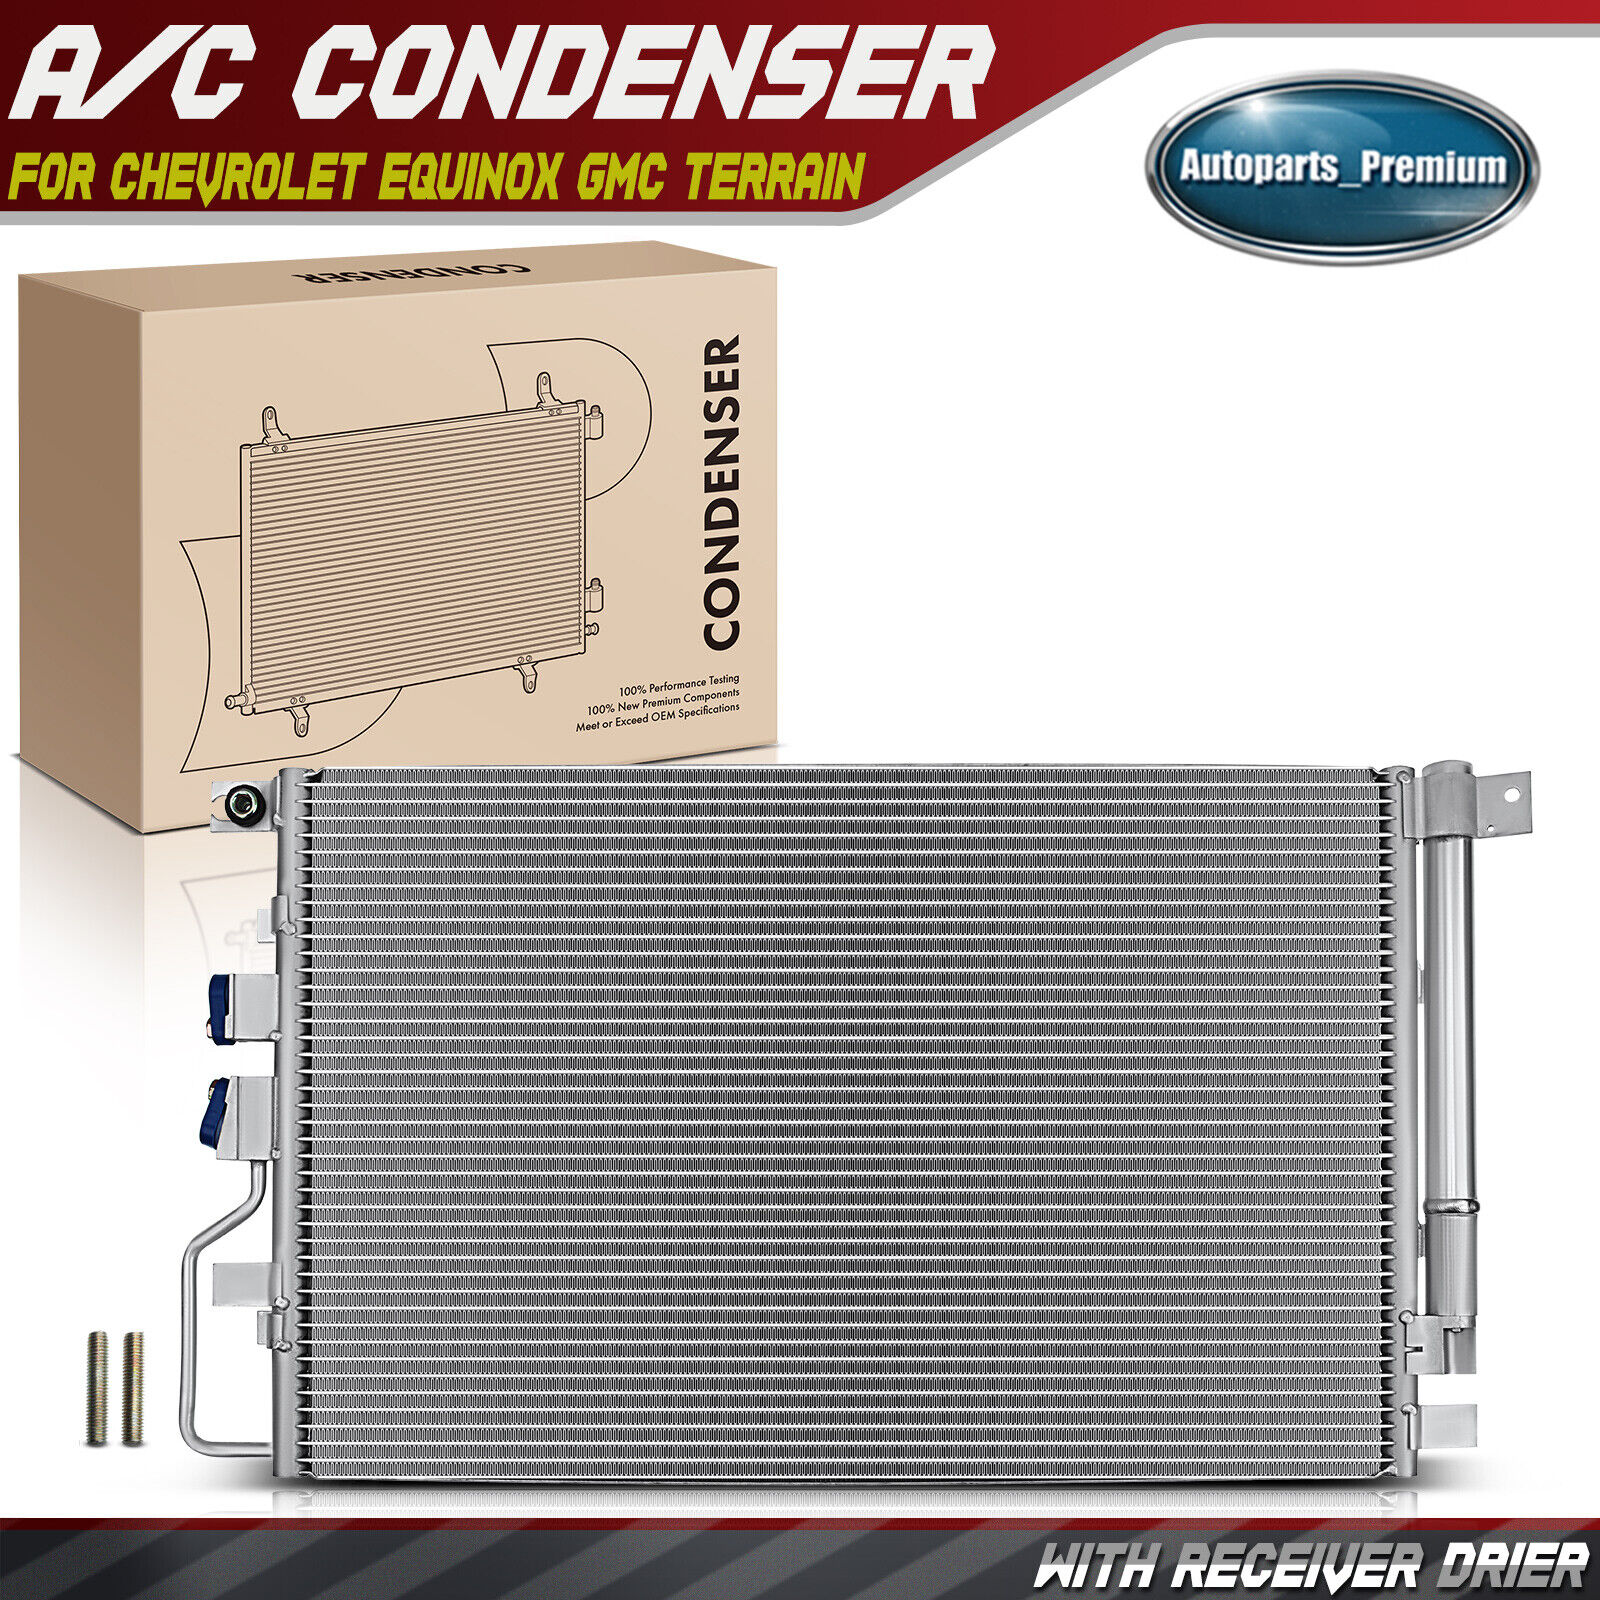 A/C AC Condenser with Receiver Drier for Chevrolet Equinox GMC Terrain 2016-2017